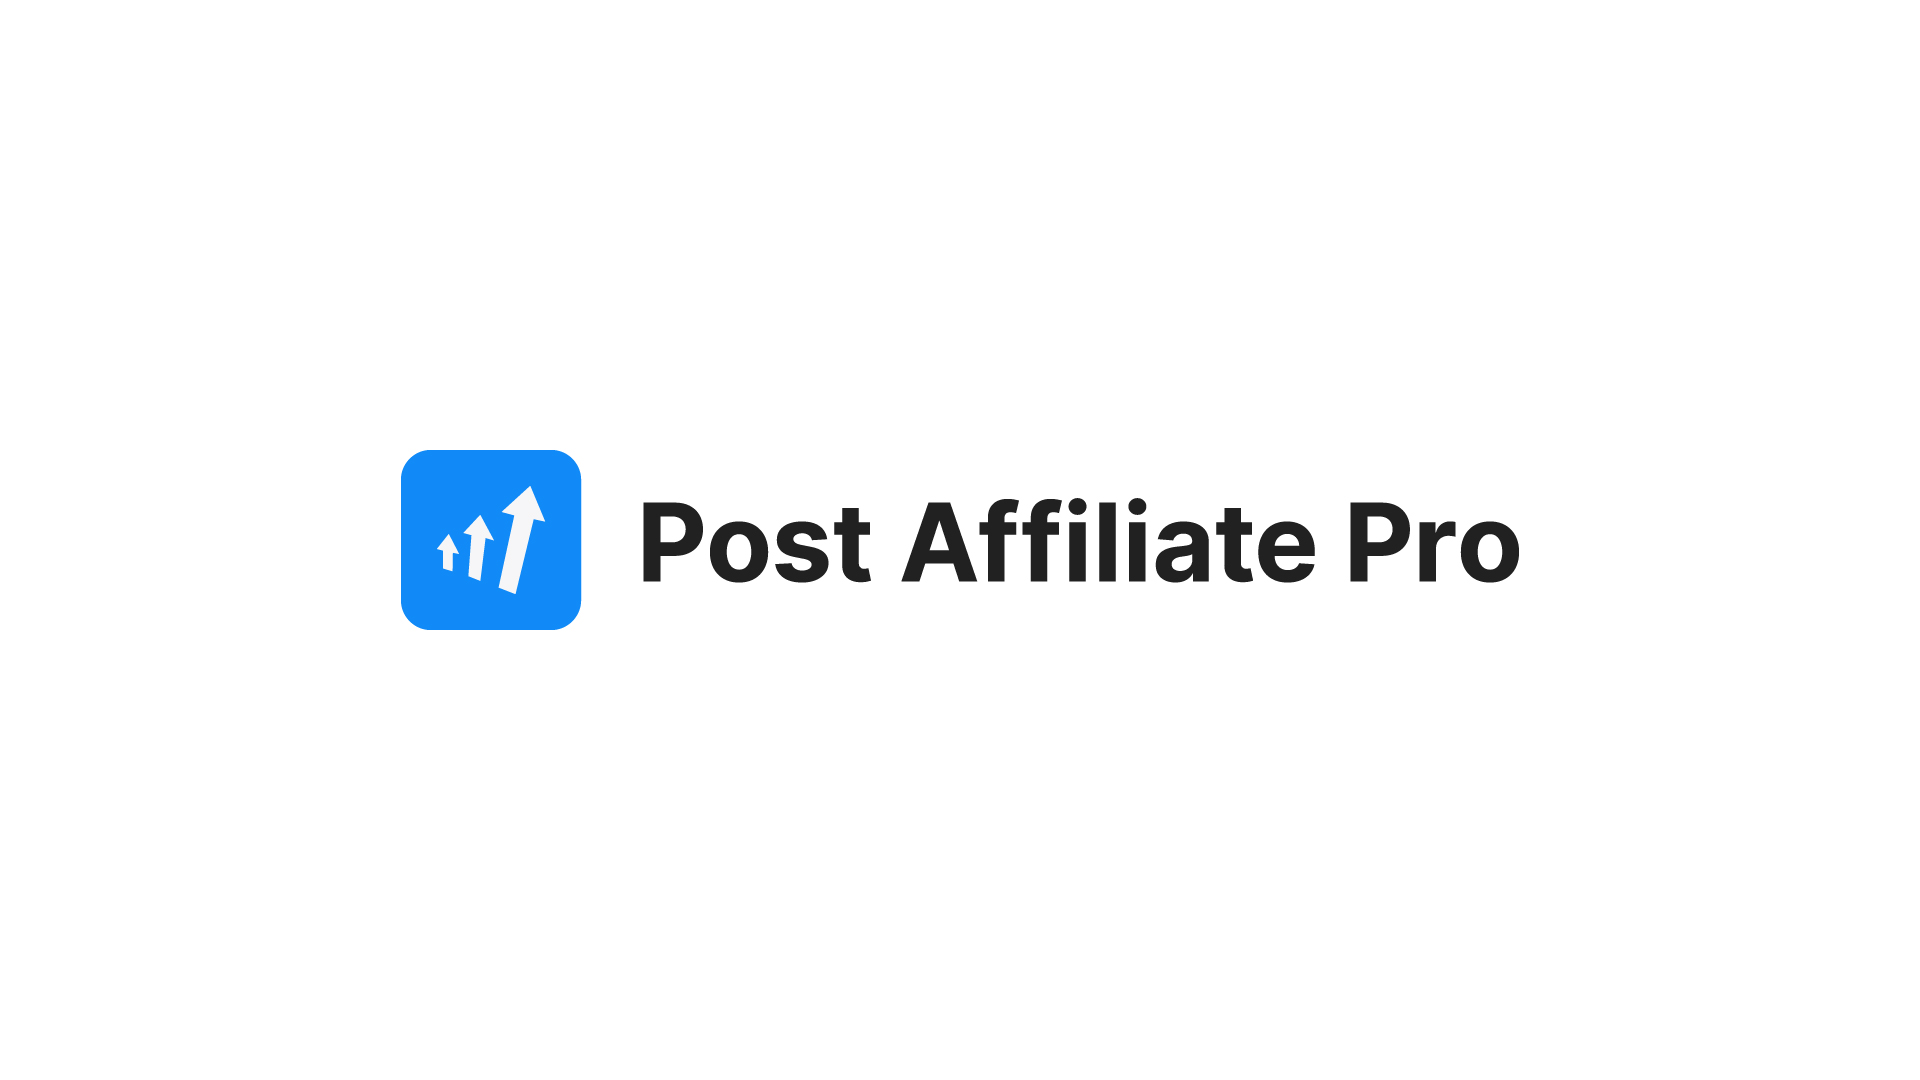 The Post Affiliate Pro Logo